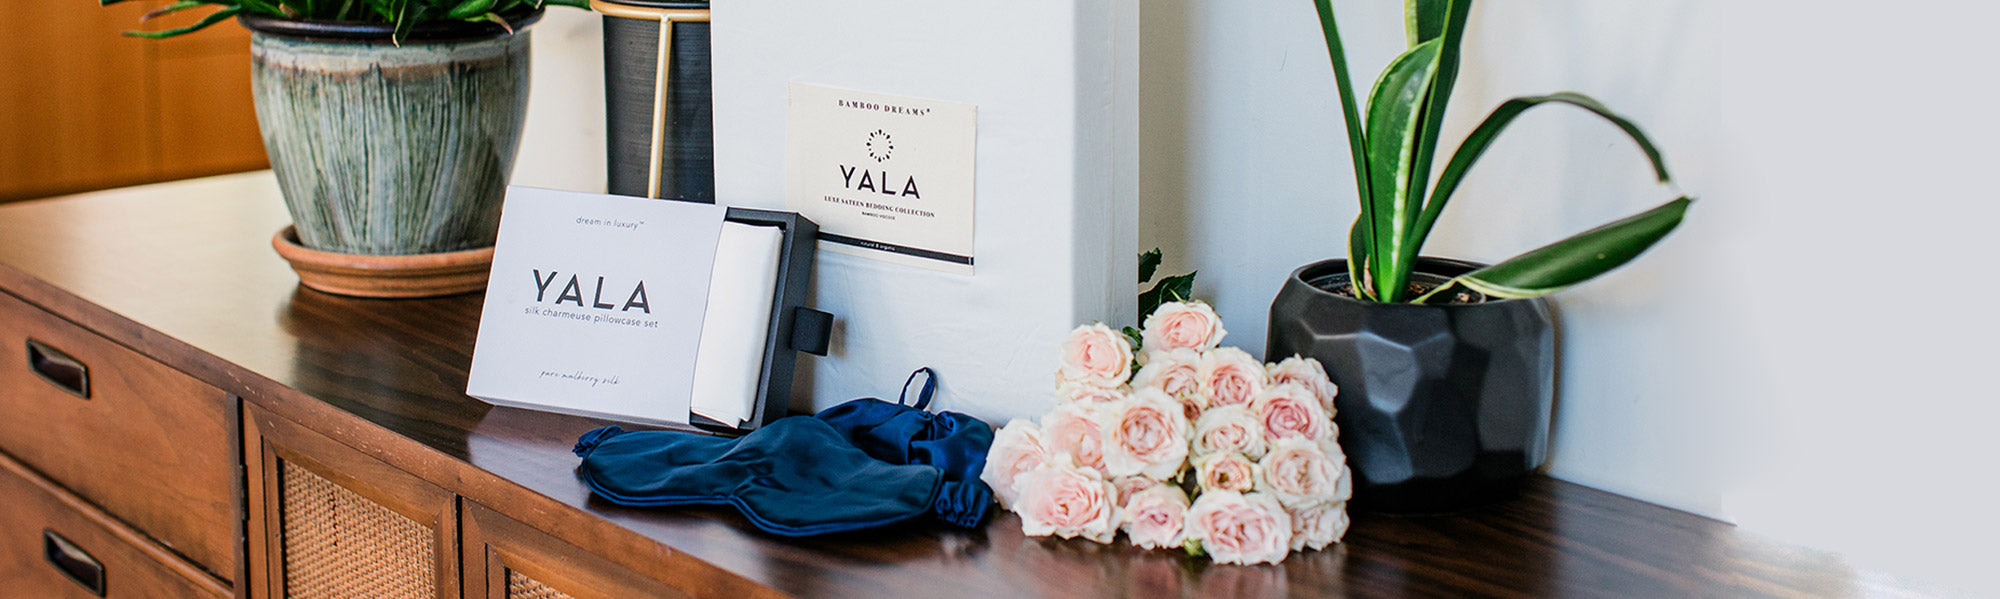 YALA Bamboo and Silk Gift Set